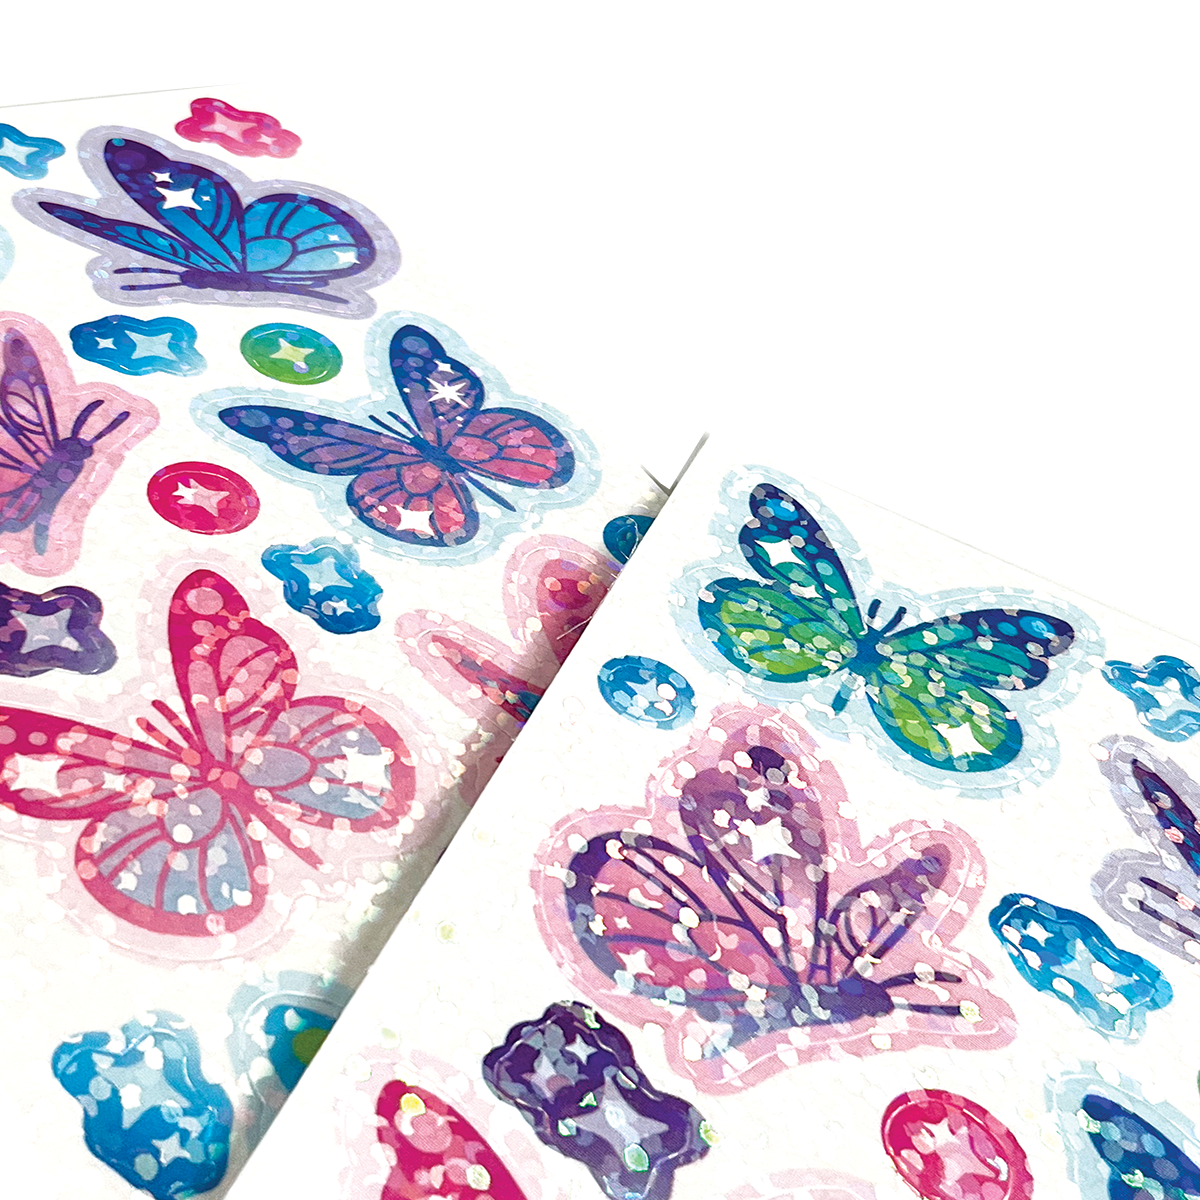 Butterfly Sketchbook & Drawing Set